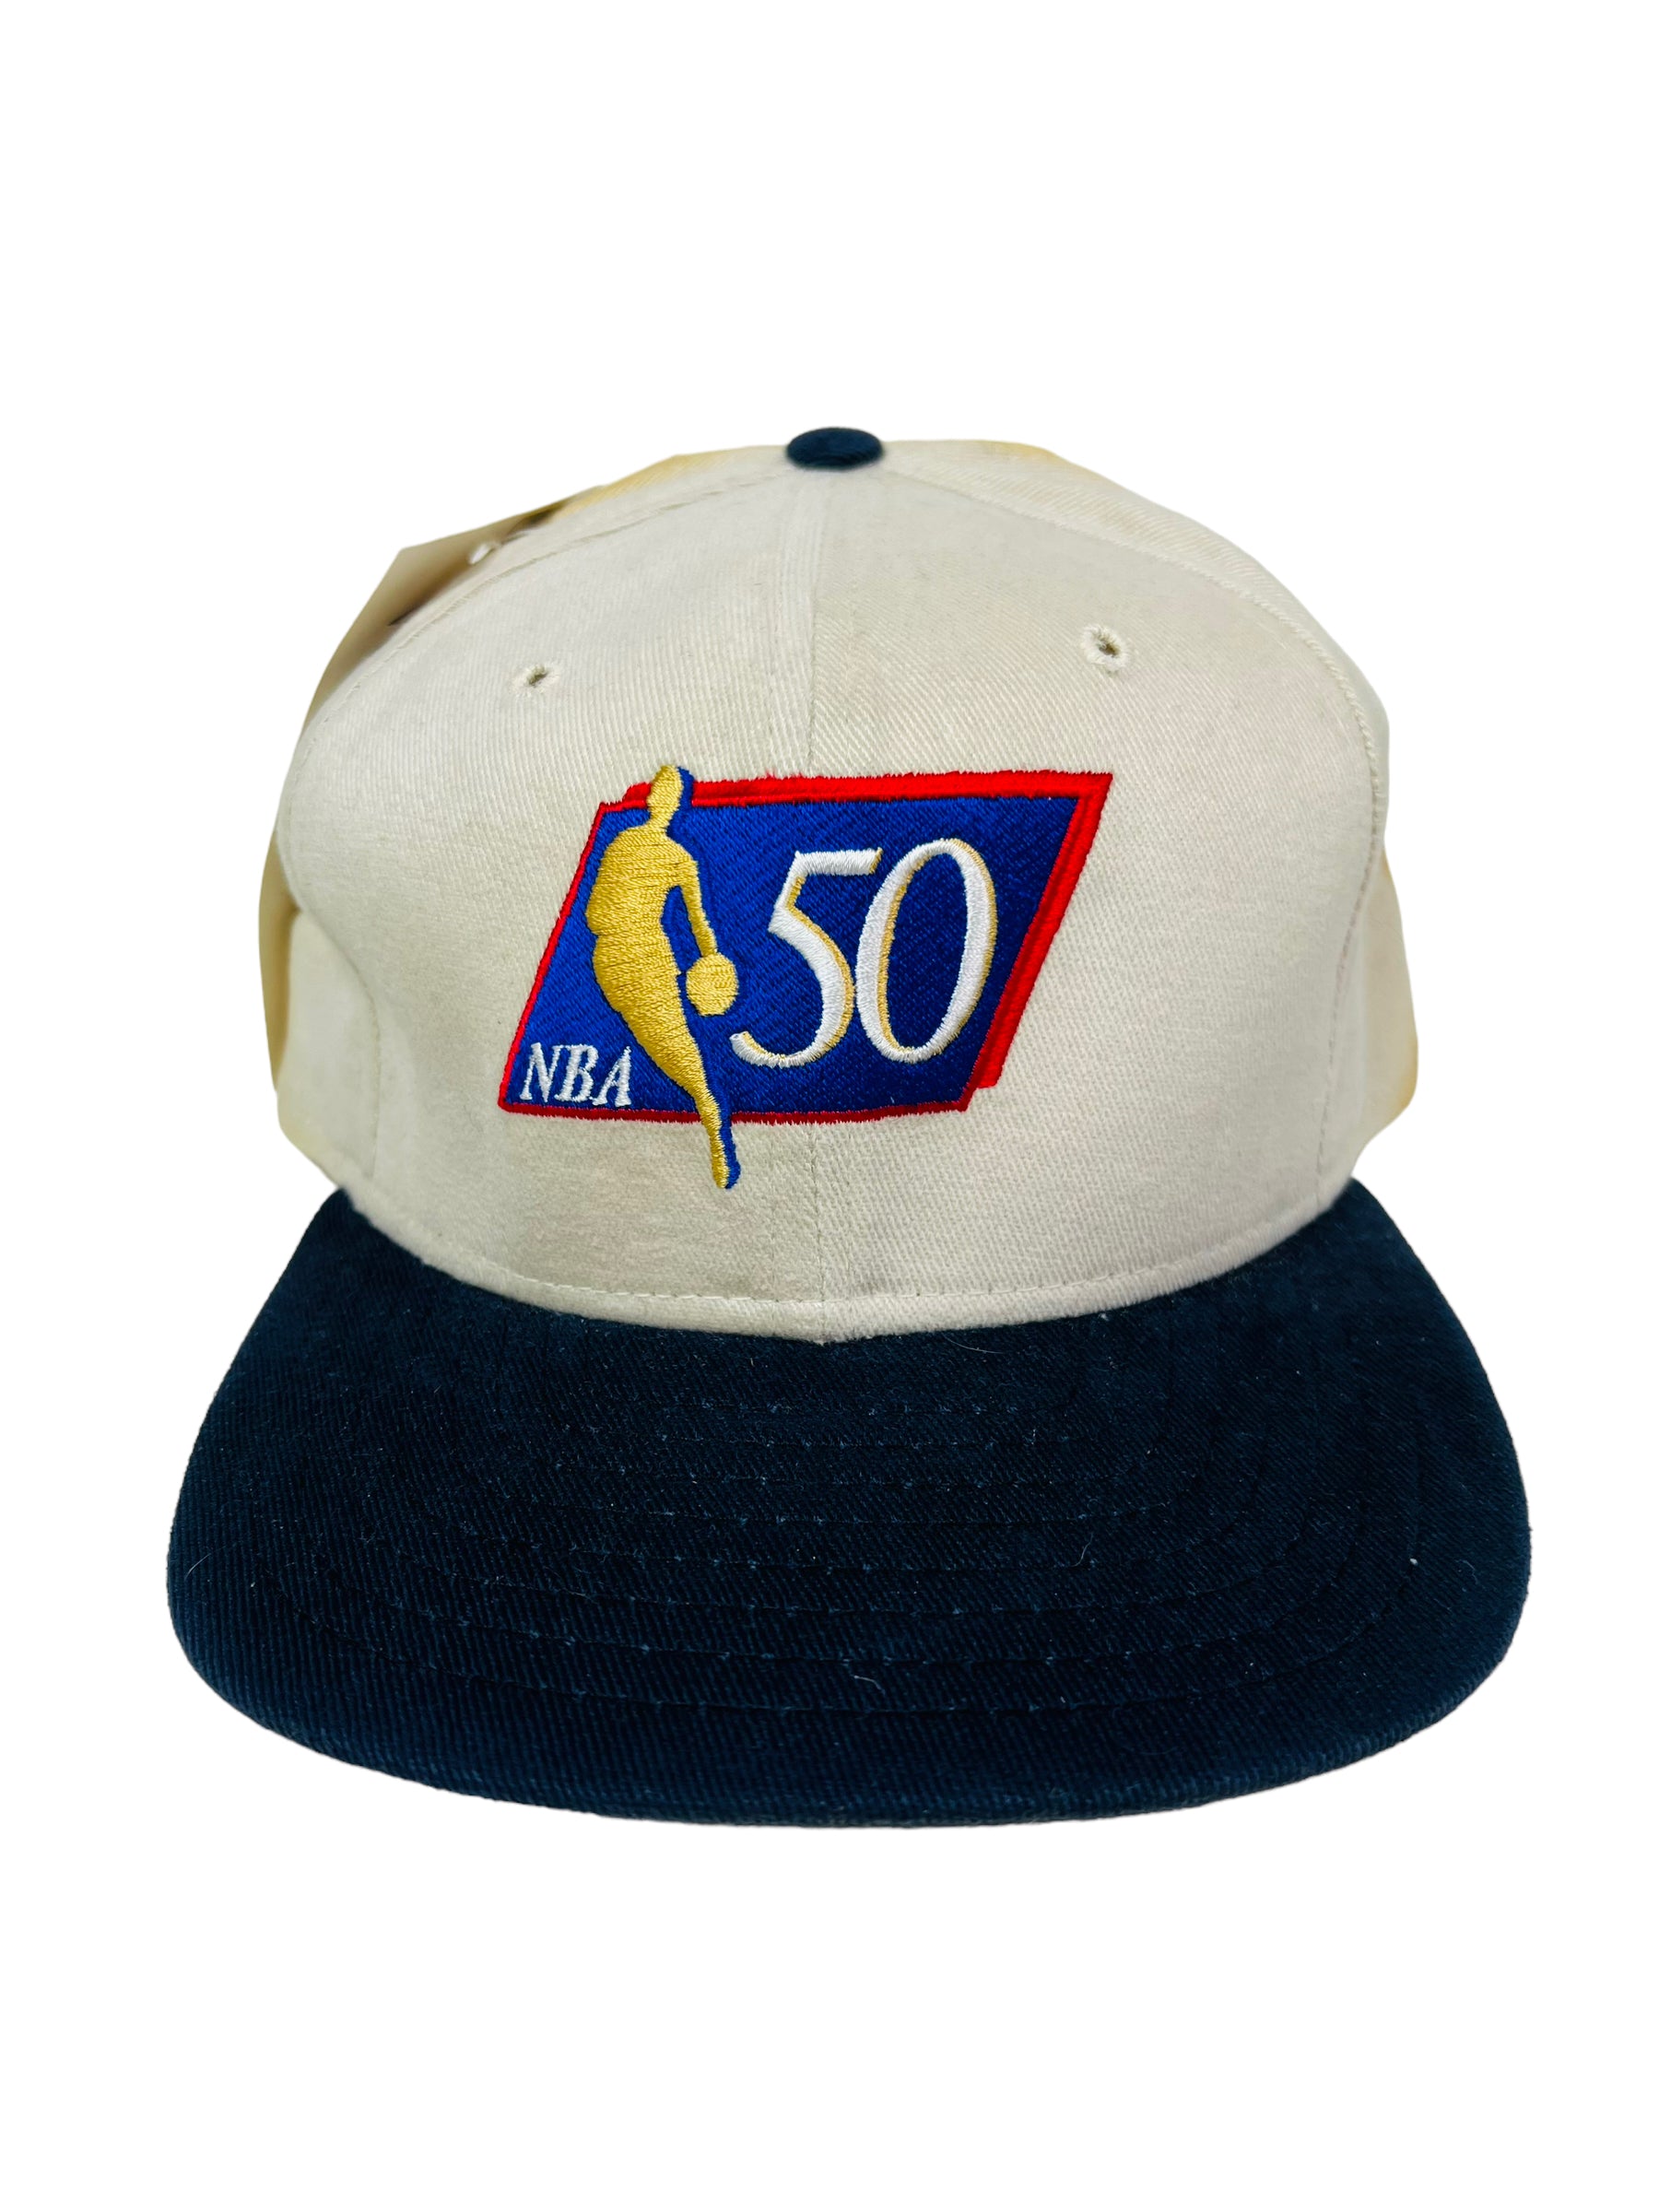 NBA ALL-STAR GAME VINTAGE 1997 AMERICAN NEEDLE STRAPBACK ADULT HAT